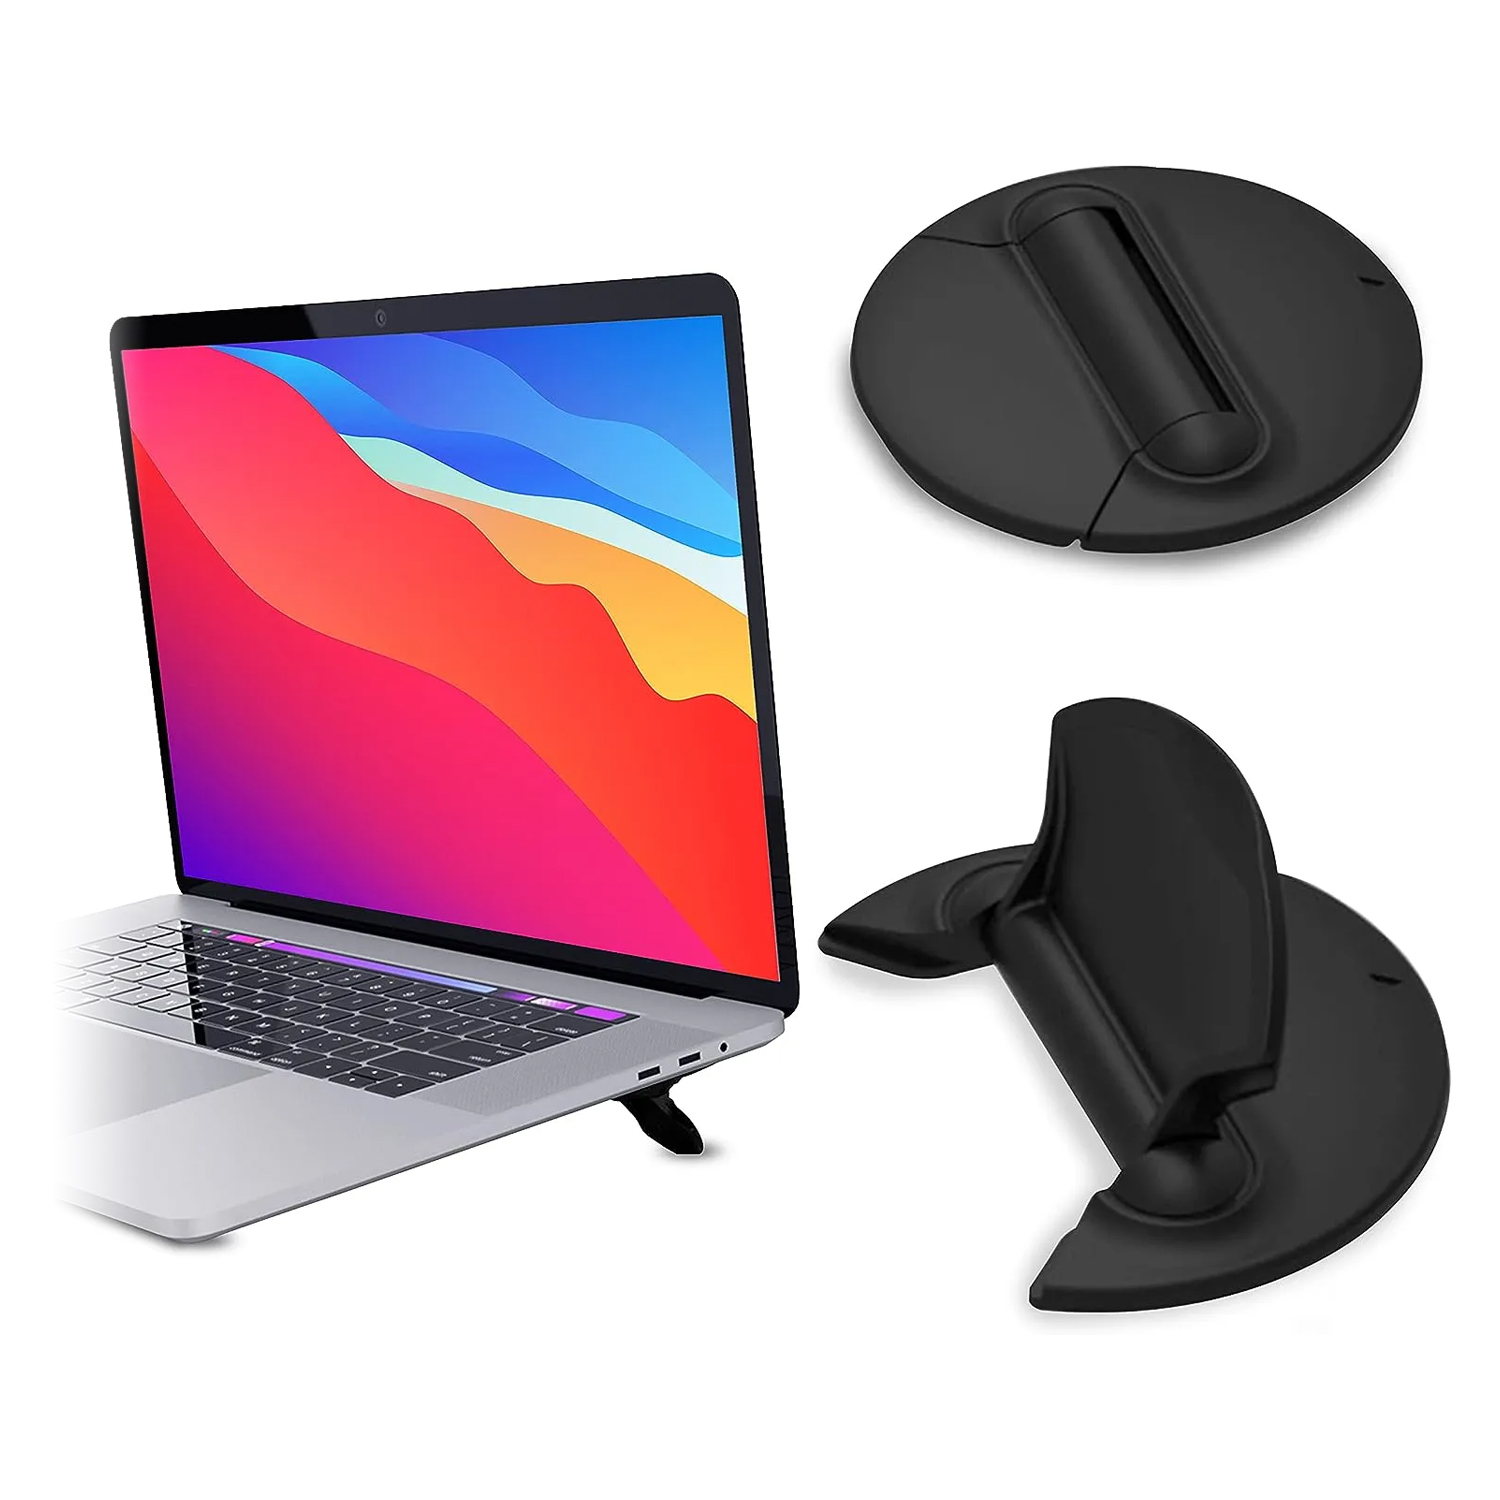 Soporte portátil de computadora portátil ligera, soporte de ángulo ajustable, computadora portátil universal